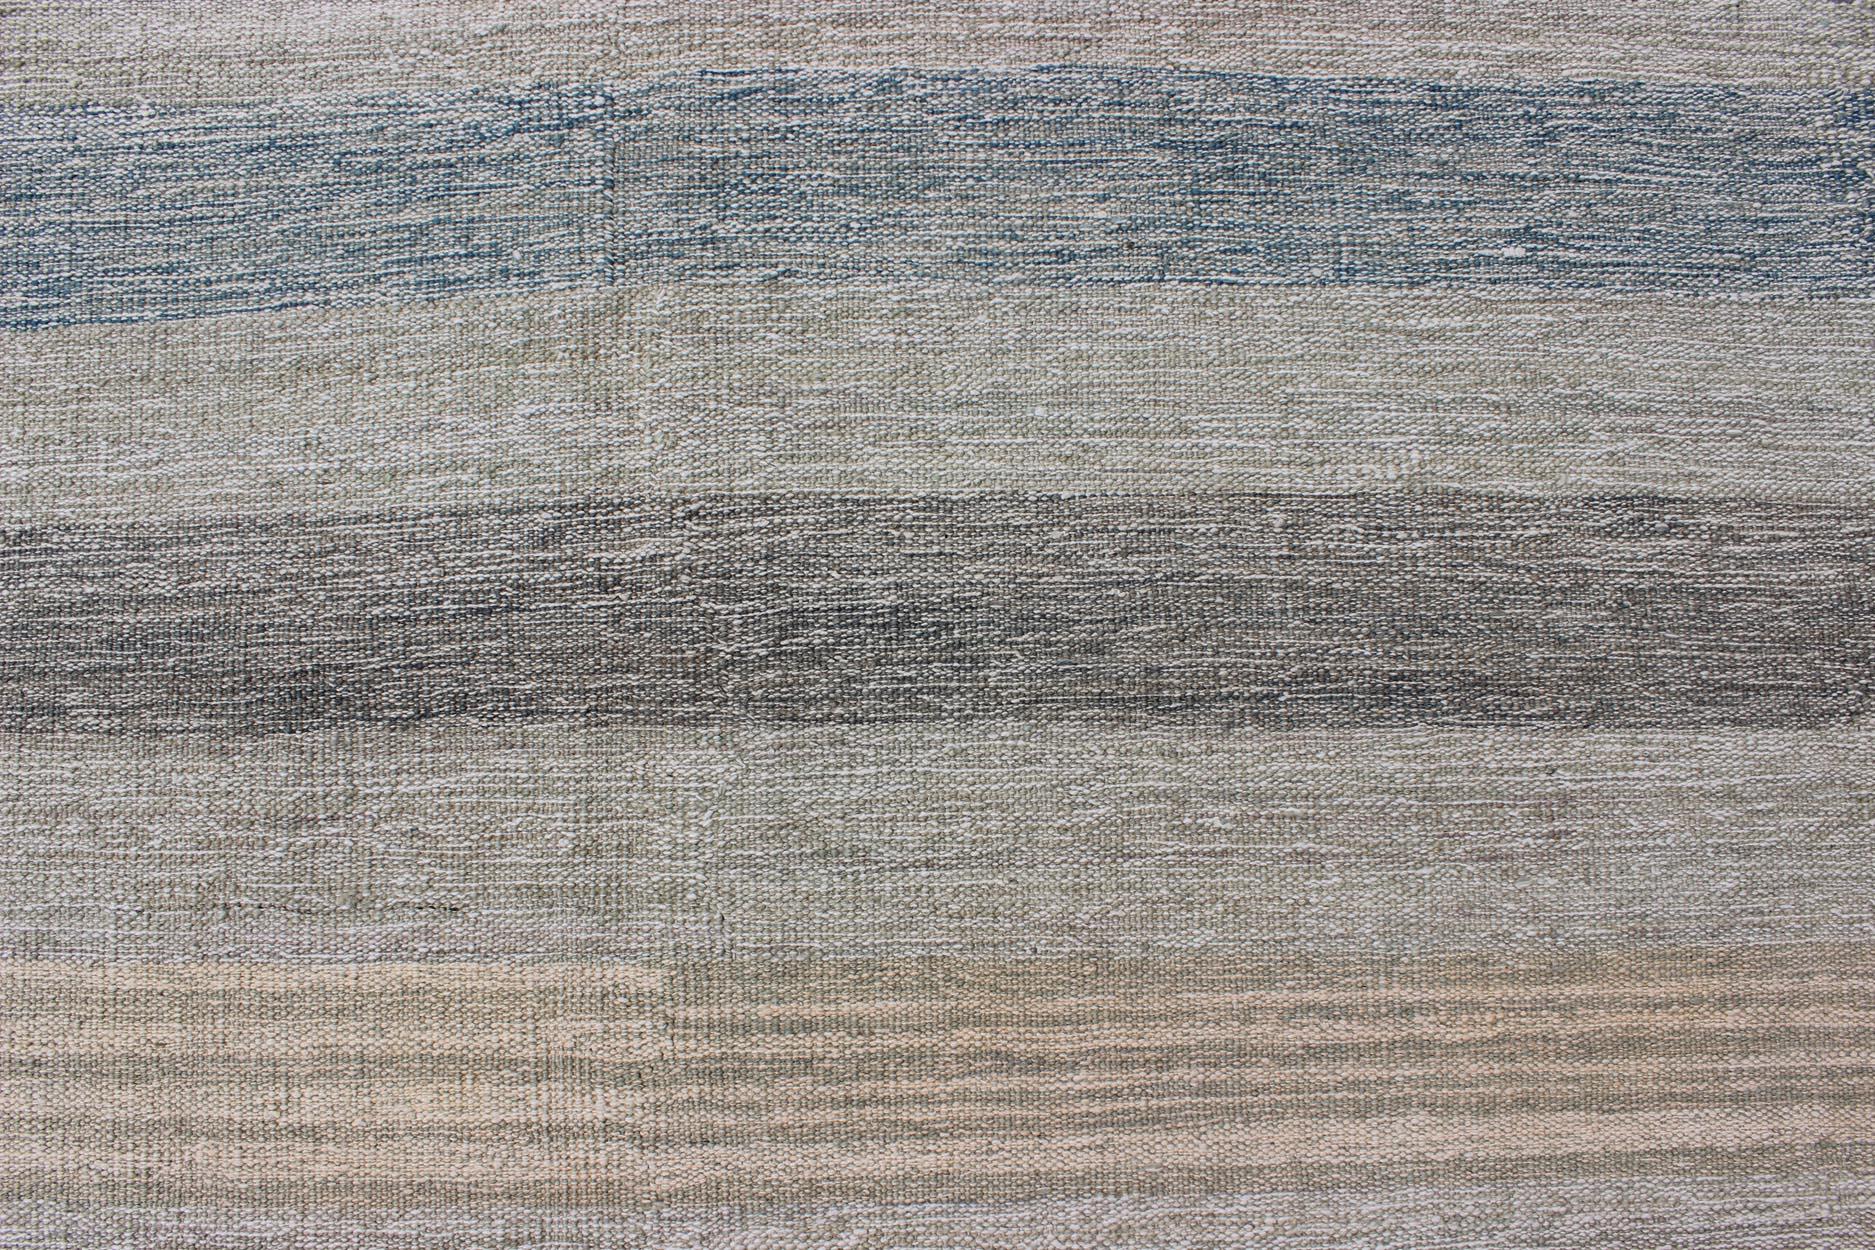 Wool Keivan Woven Arts Flat-Weave Kilim in Striped Design  8'1 x 11'4 For Sale